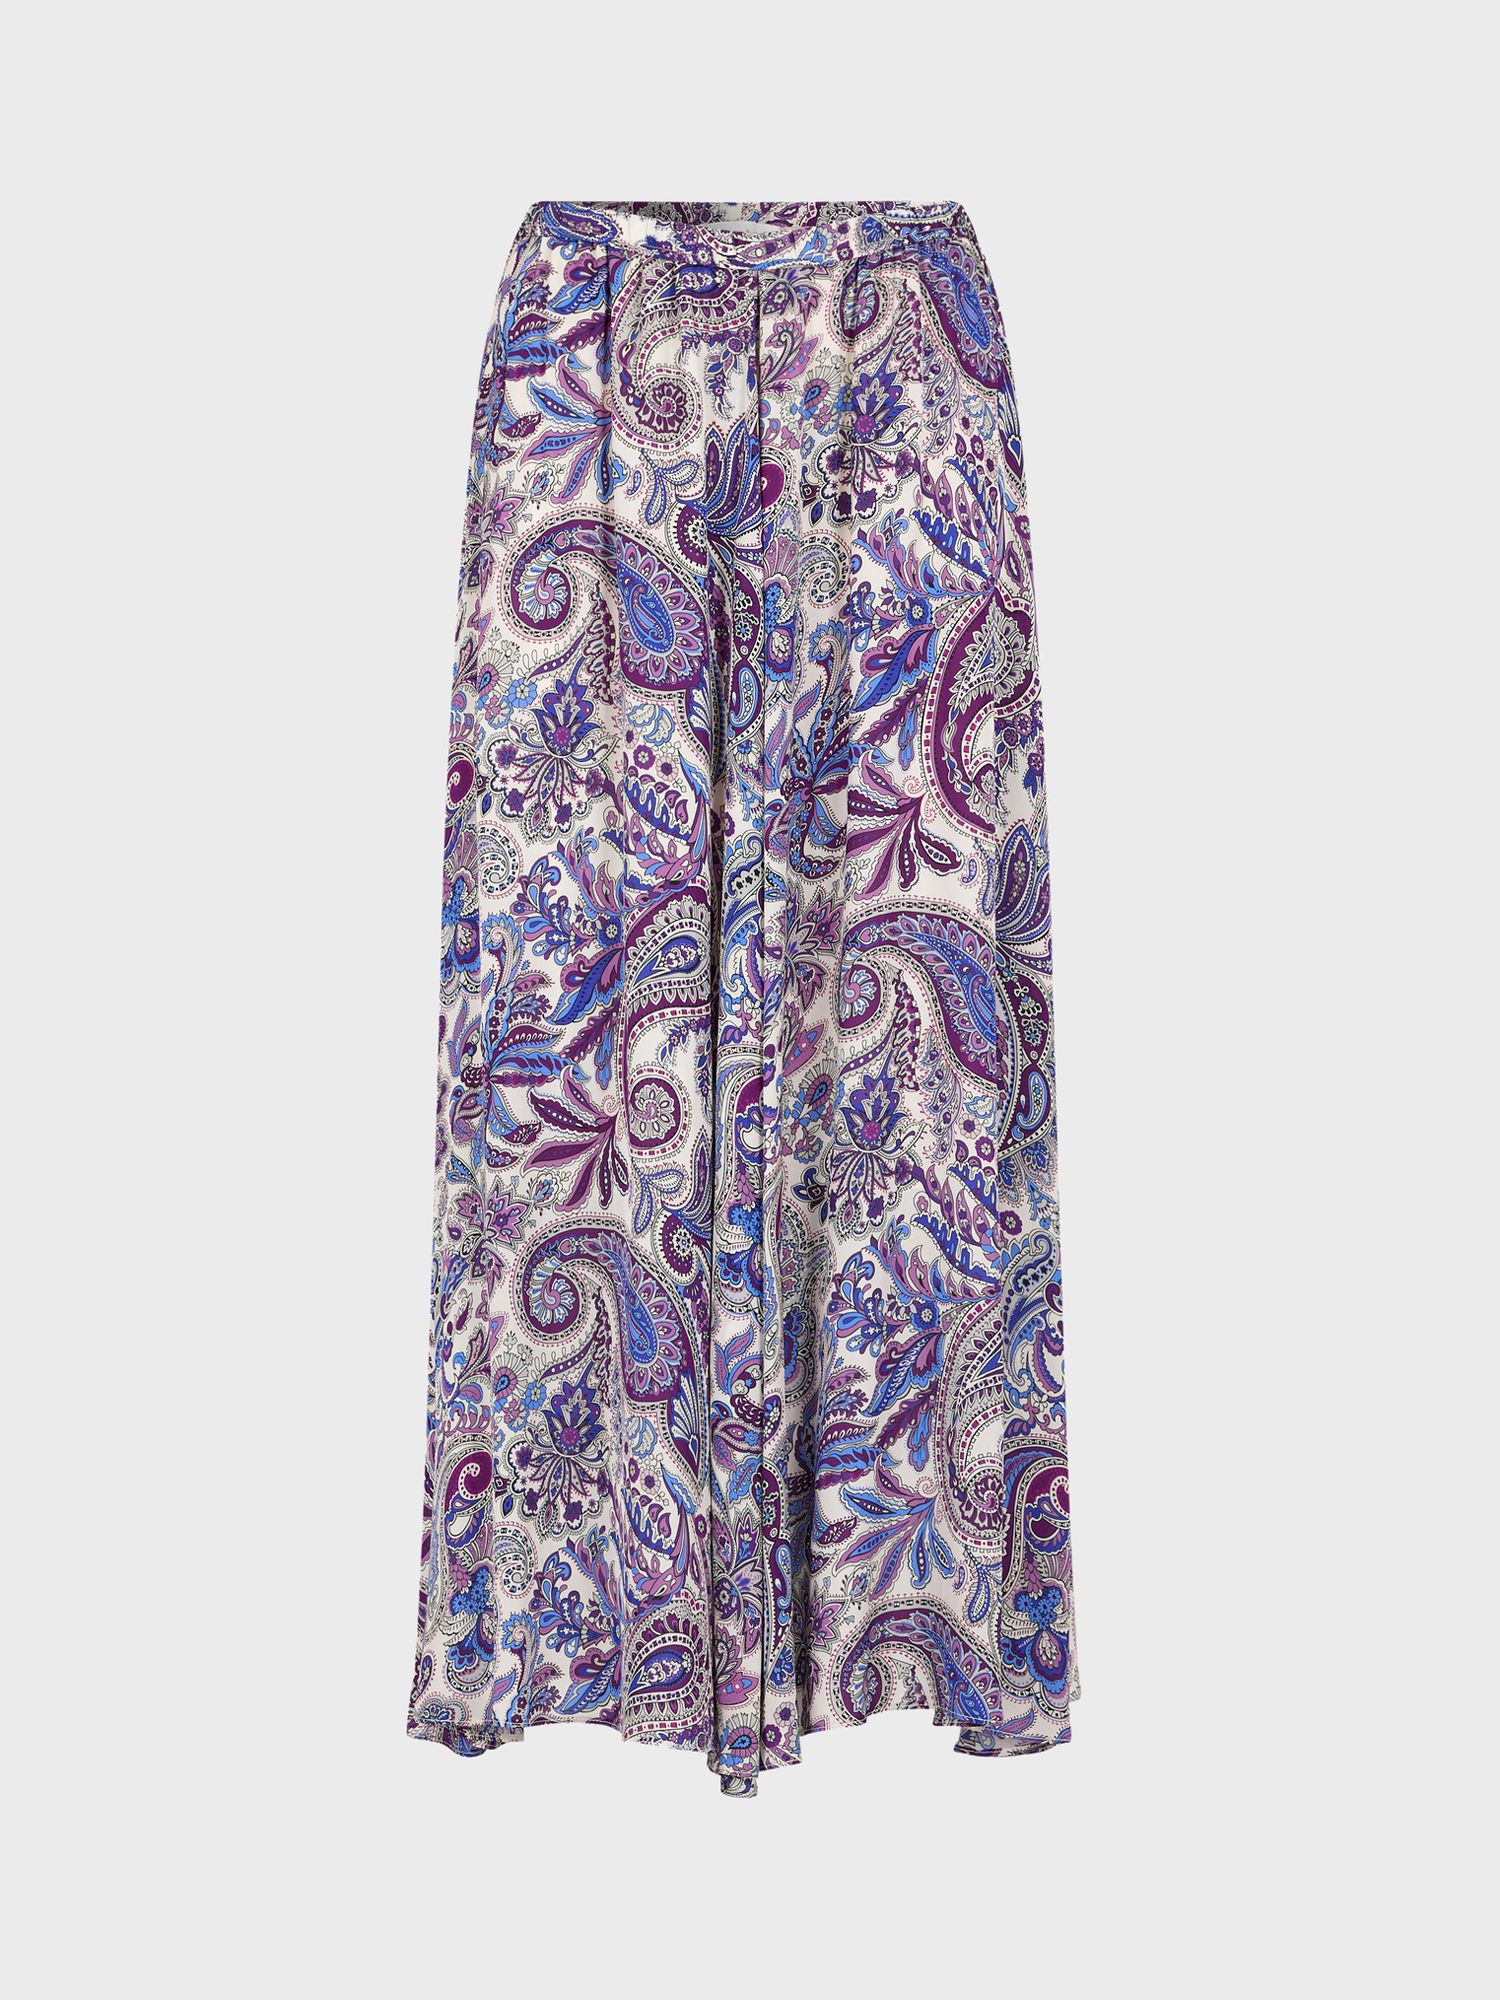 Gerard Darel Daffy Paisley Print Midi Skirt, Purple/Multi, 10